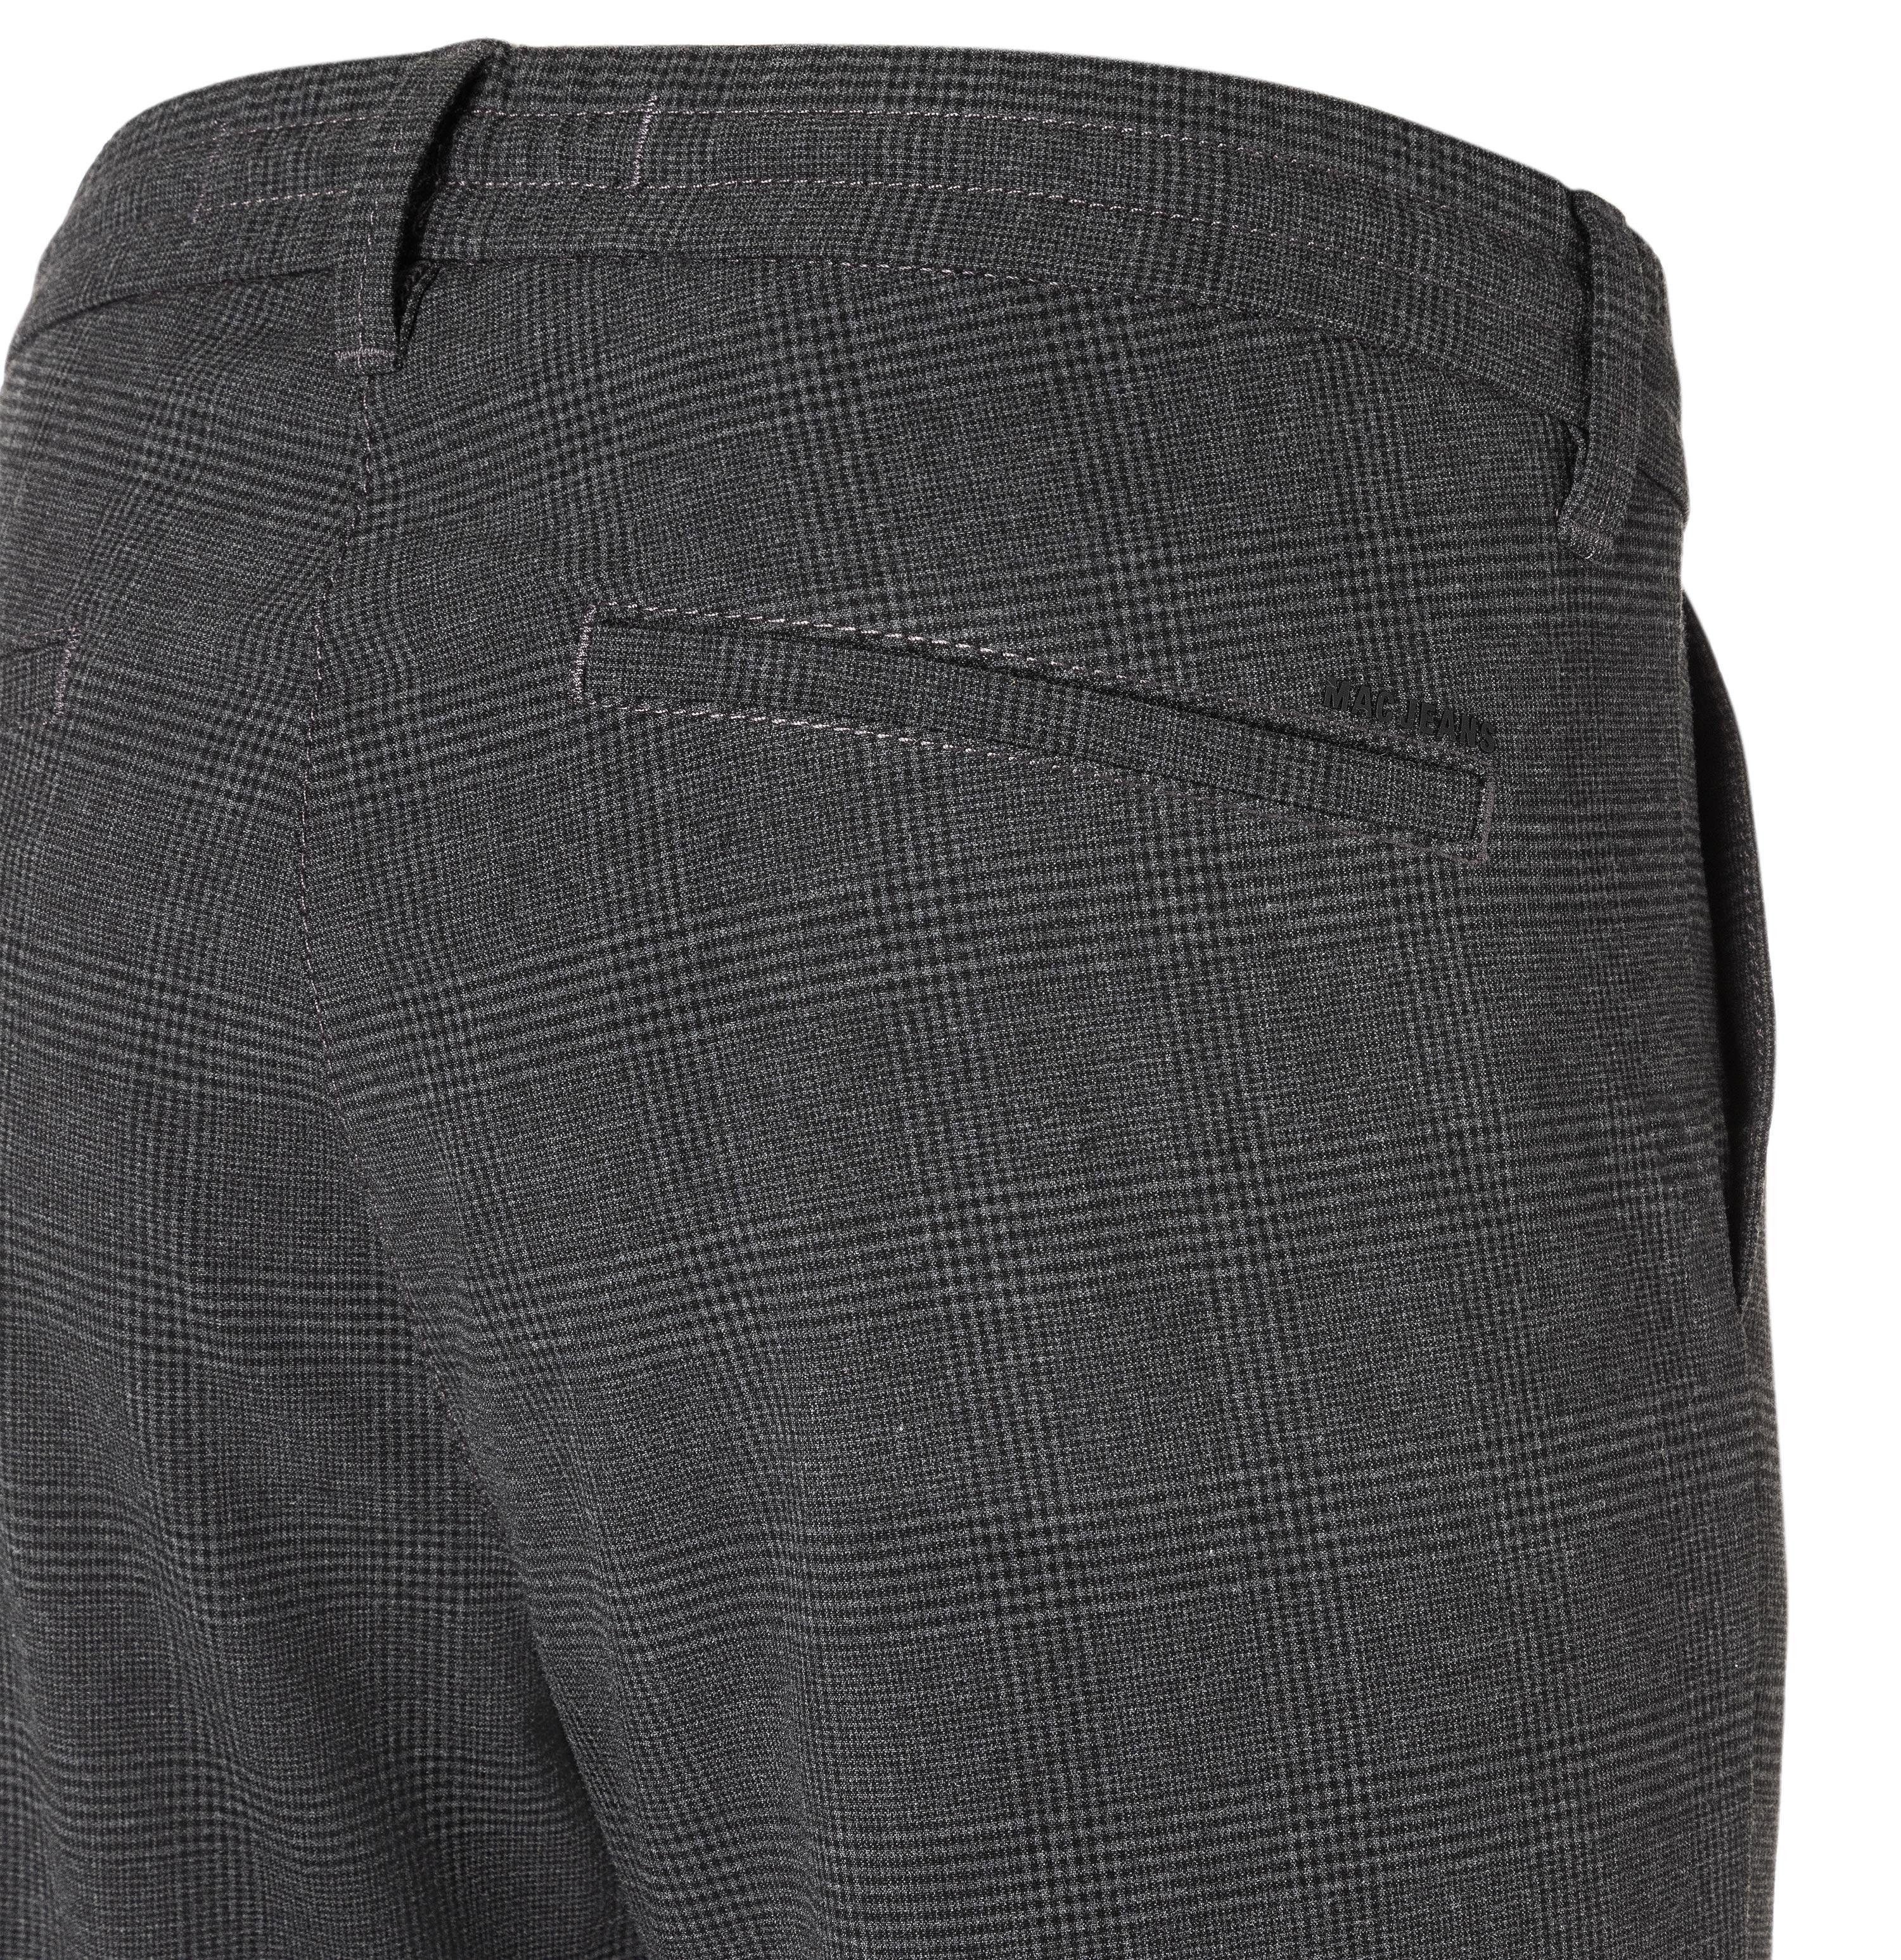 Herren Jeans MAC 5-Pocket-Jeans MAC LENNOX SPORT grey stone 6333-00-0703L 077K